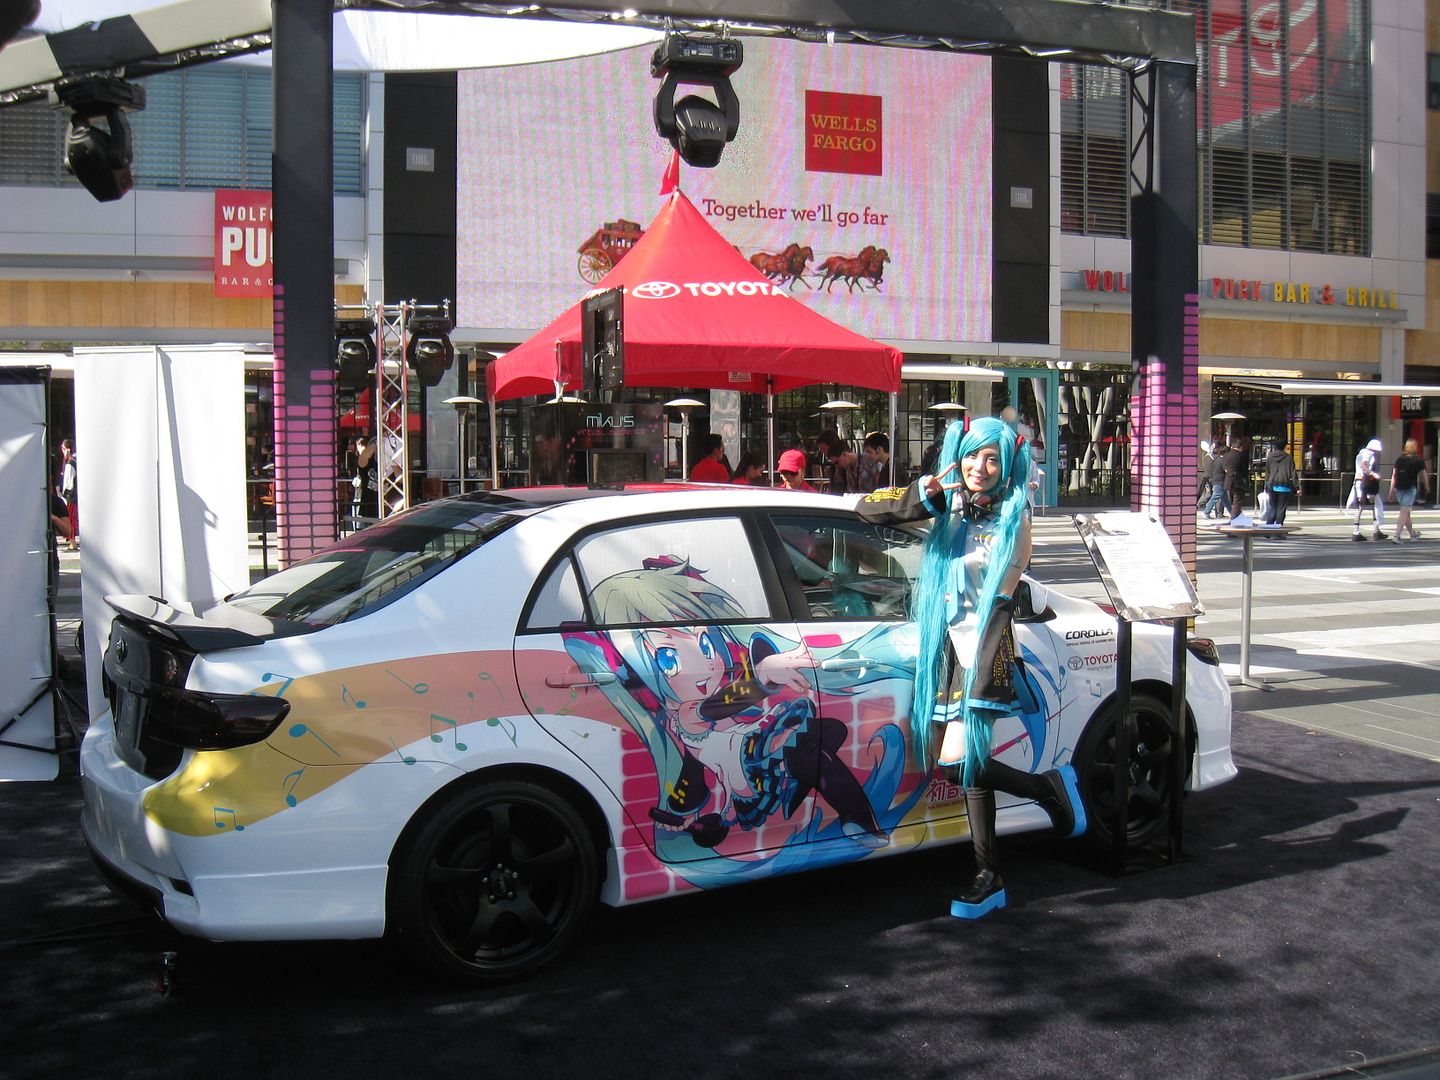 Anime Expo 2011